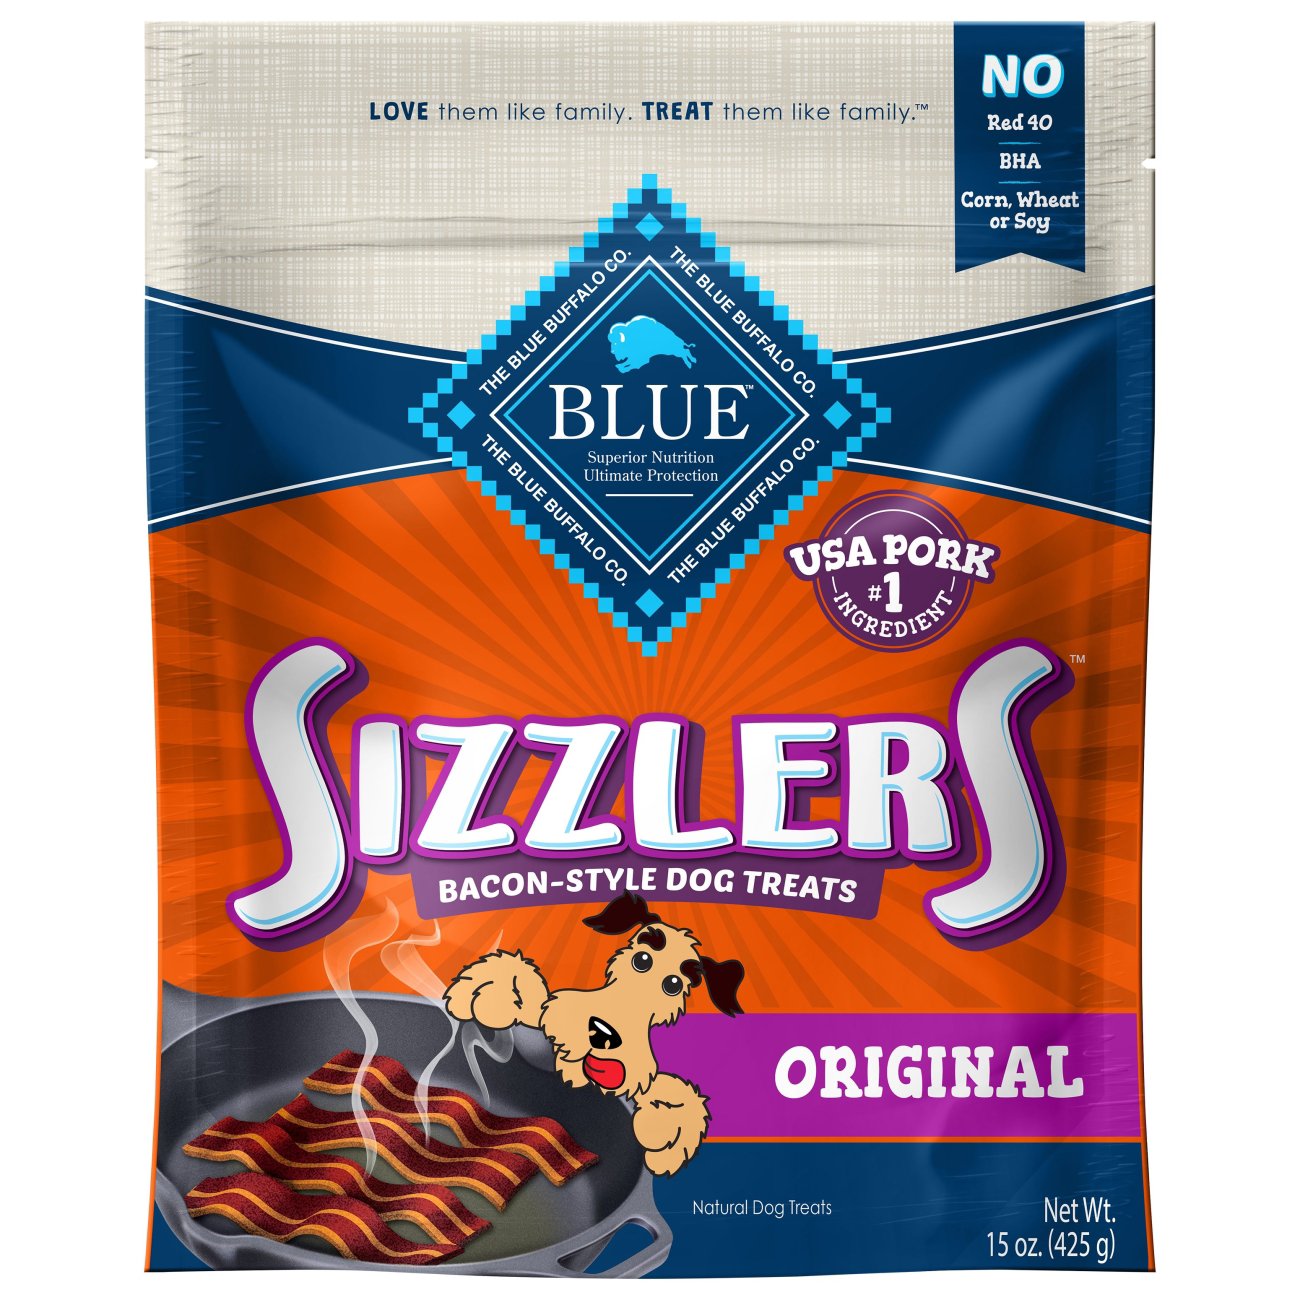 blue-buffalo-sizzlers-original-bacon-style-dog-treats-shop-dogs-at-h-e-b